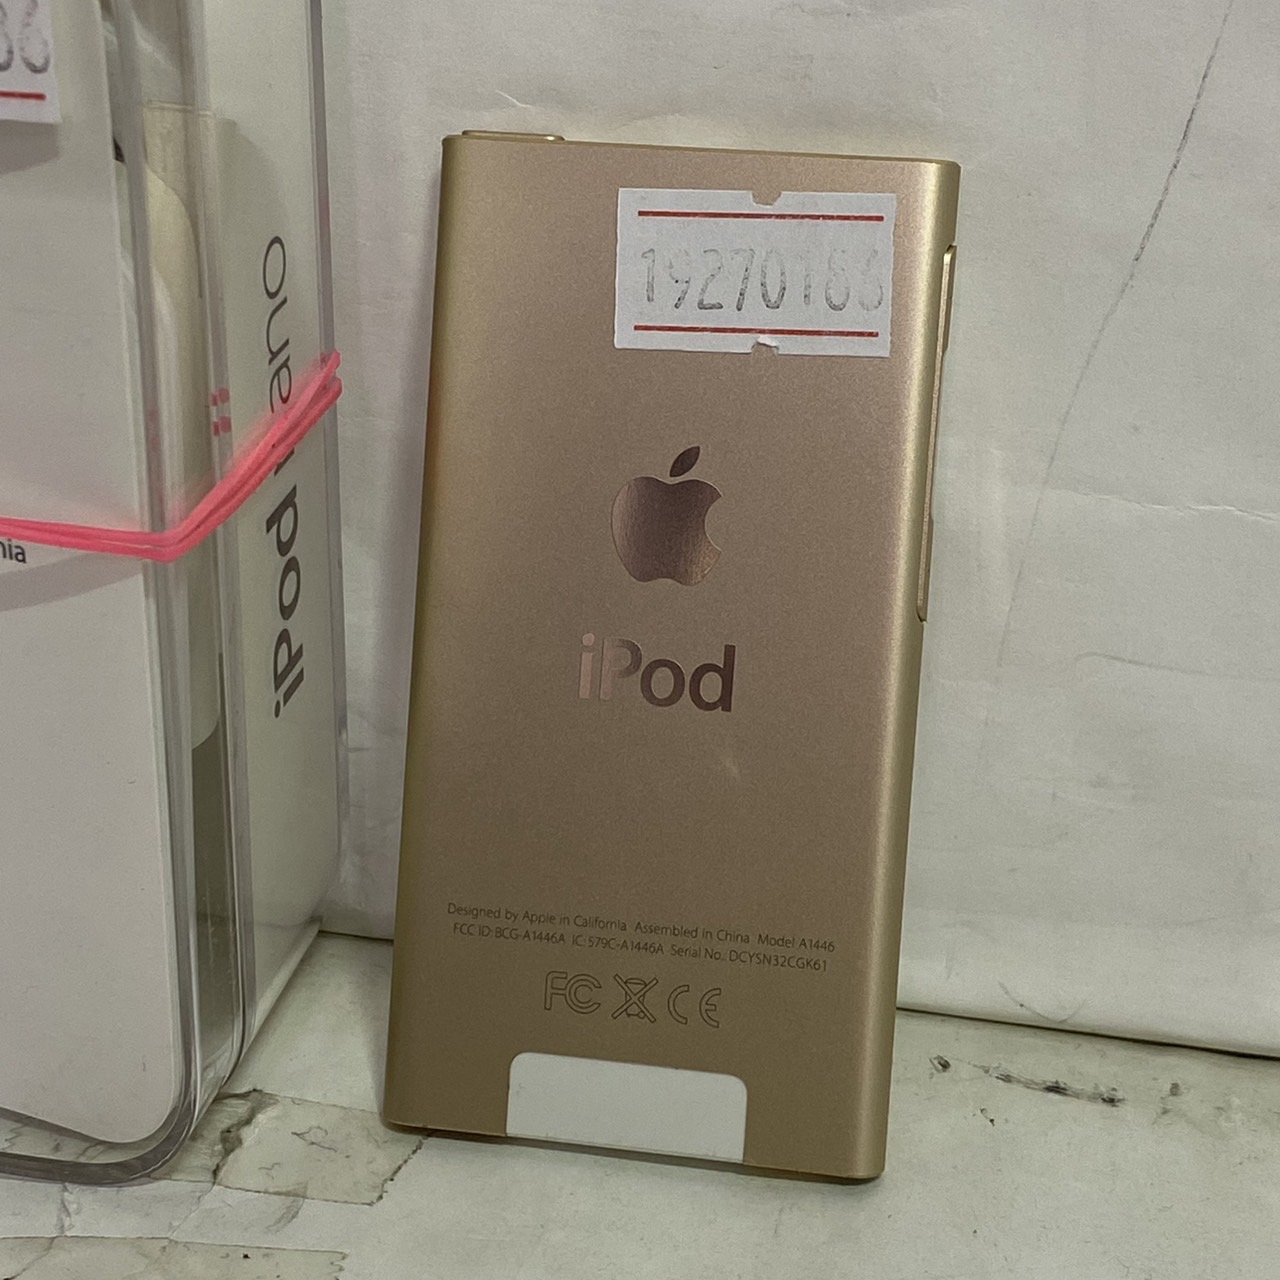 APPLE(アップル) iPod nano 第7世代 [16GB]の激安通販(詳細情報 ...